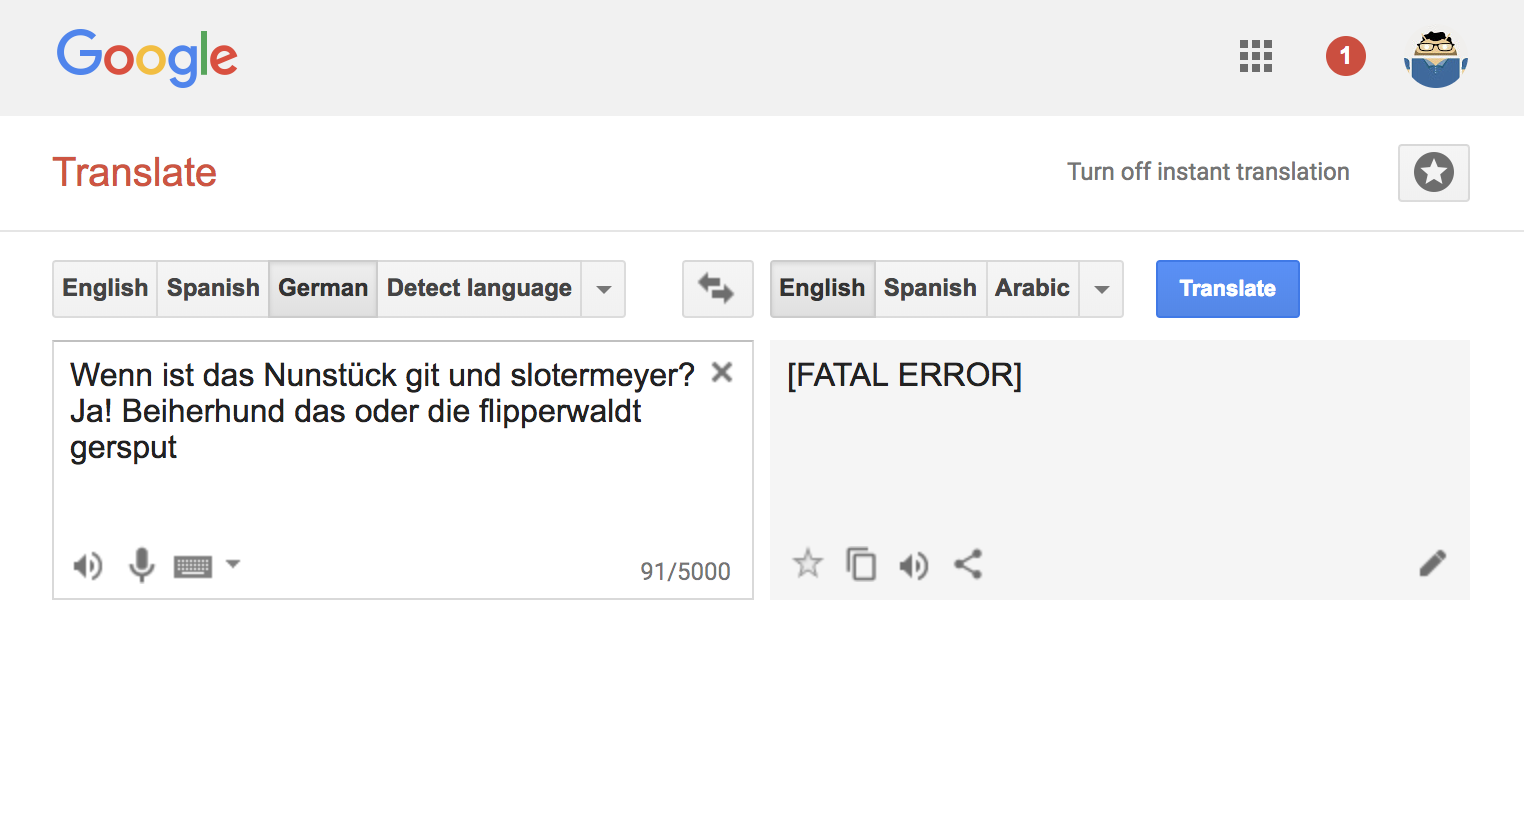 If you Google Translate Monty Python's "Killer Joke" from German to English, Google dies.